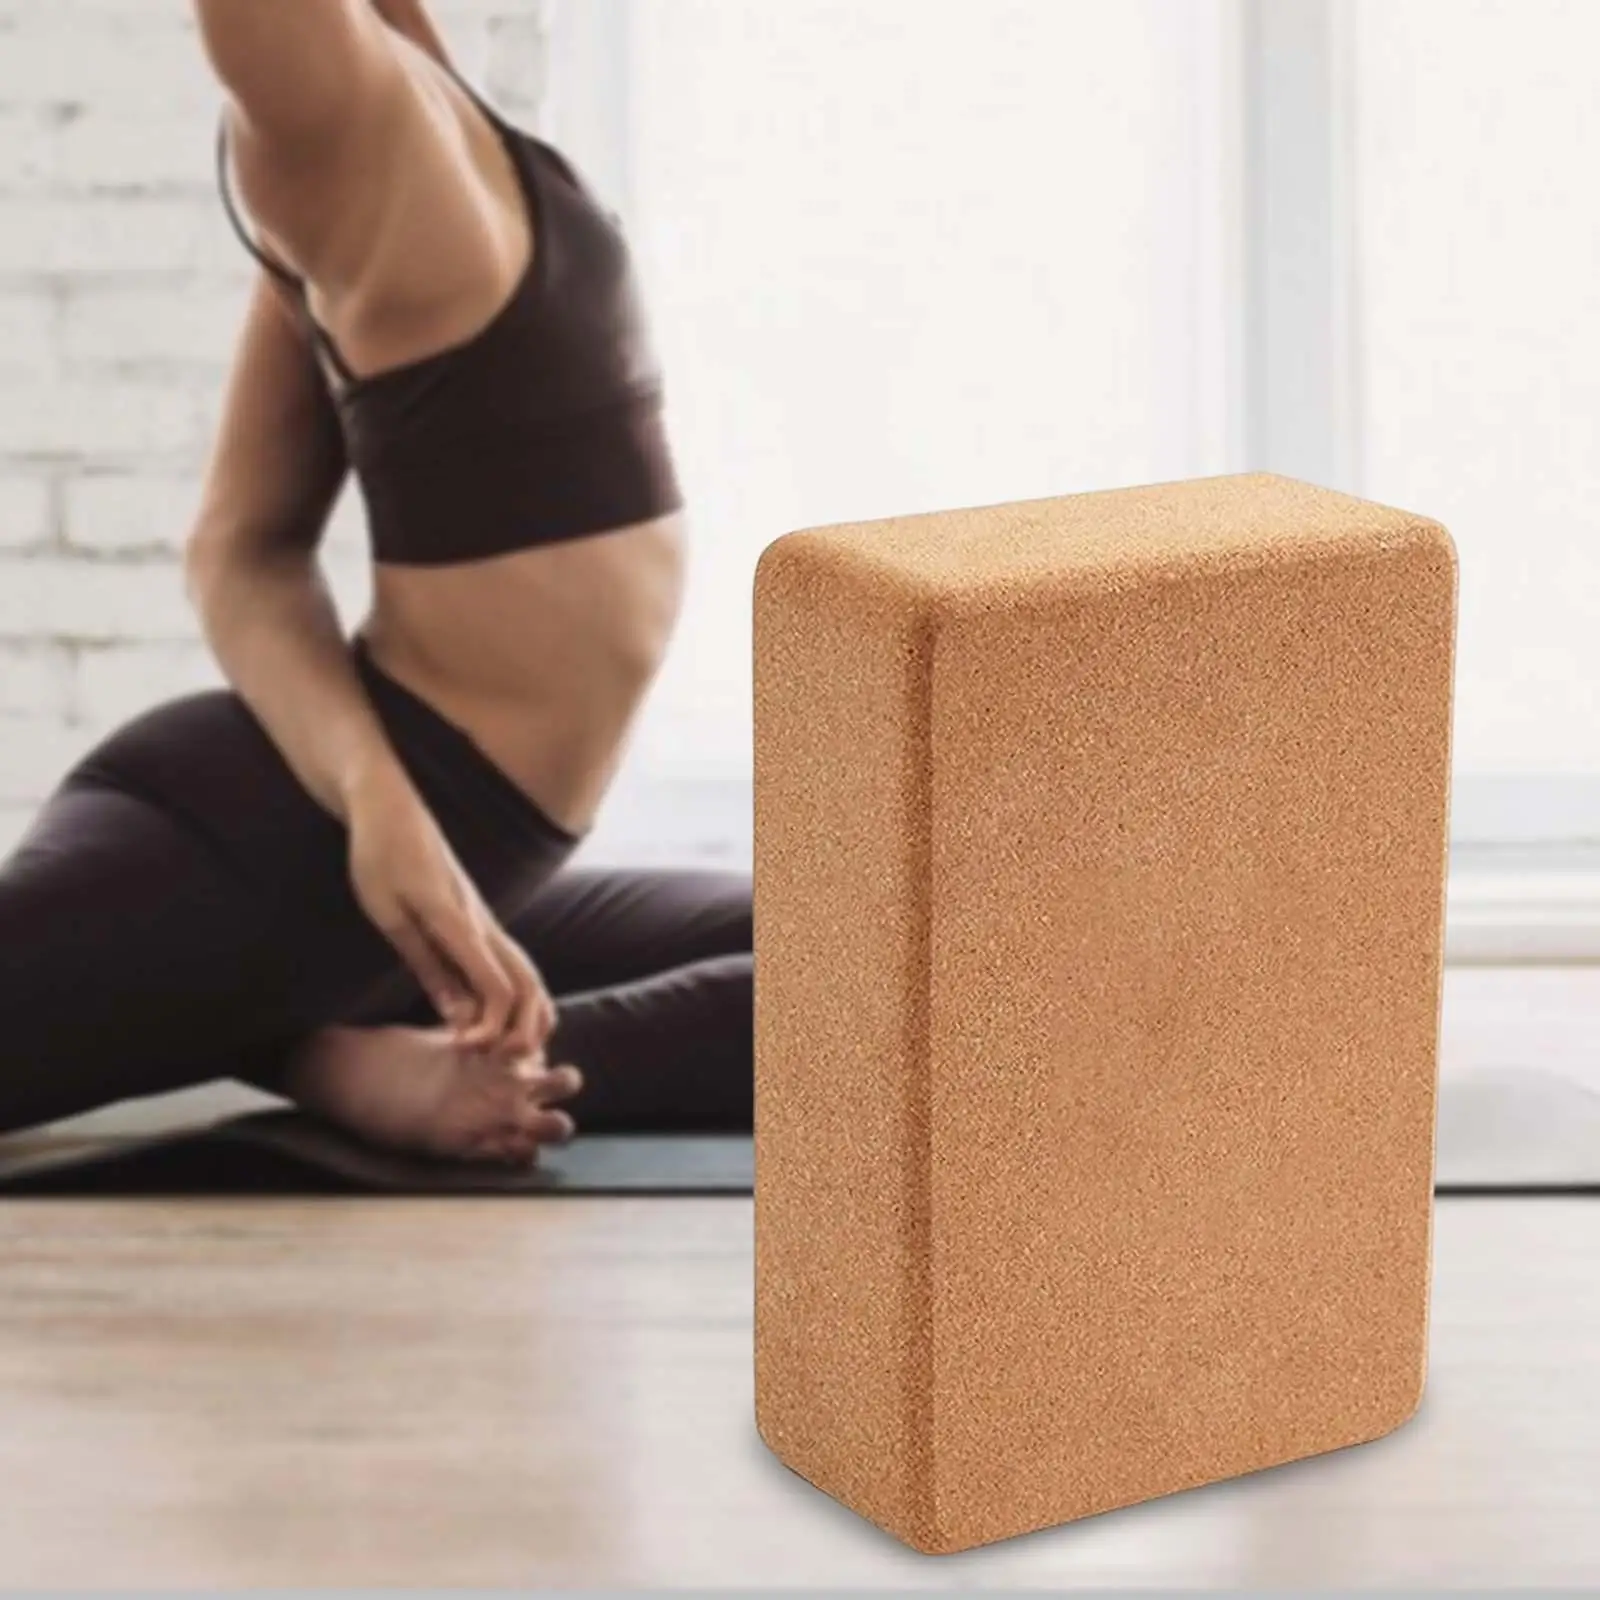 Cork Yoga Brick Exercise Brick Body Building Squat Wedge Block Lightweight Meditation for Gym Weightlifting Stretching Yoga Home